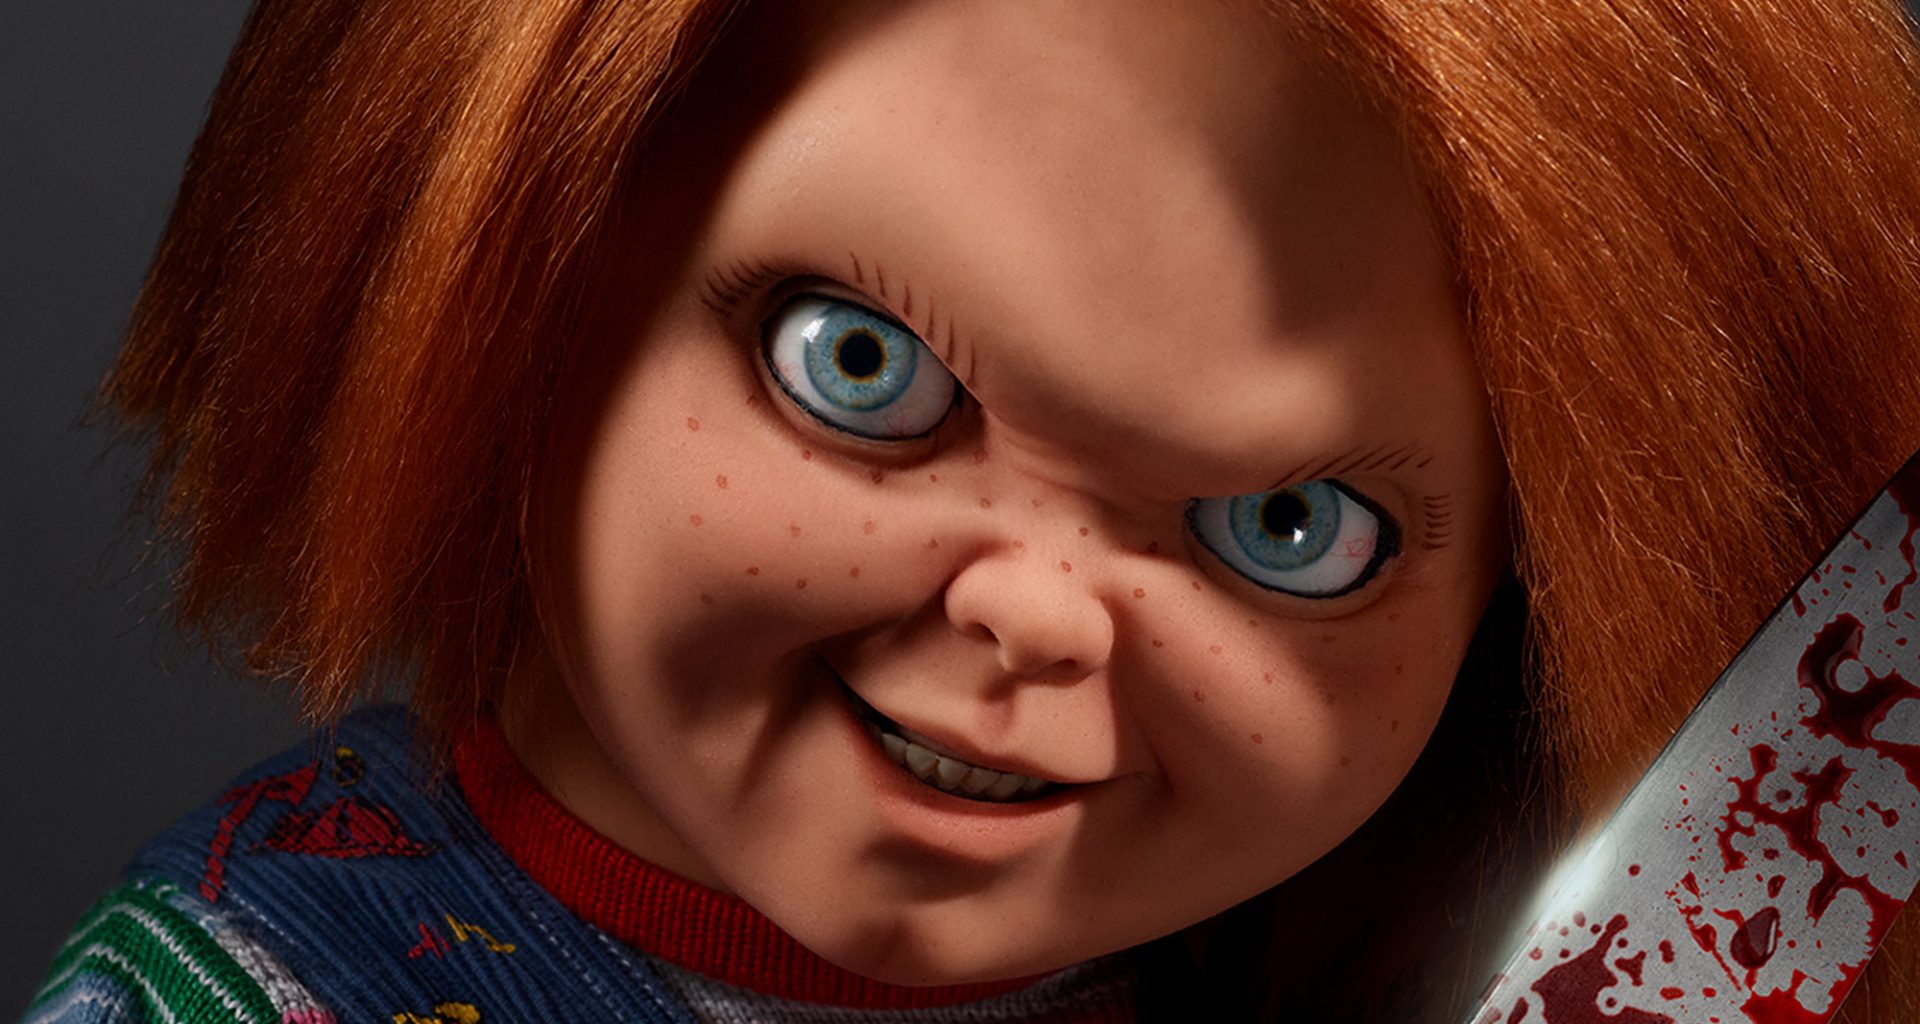 Chucky Episode 4 Release Date